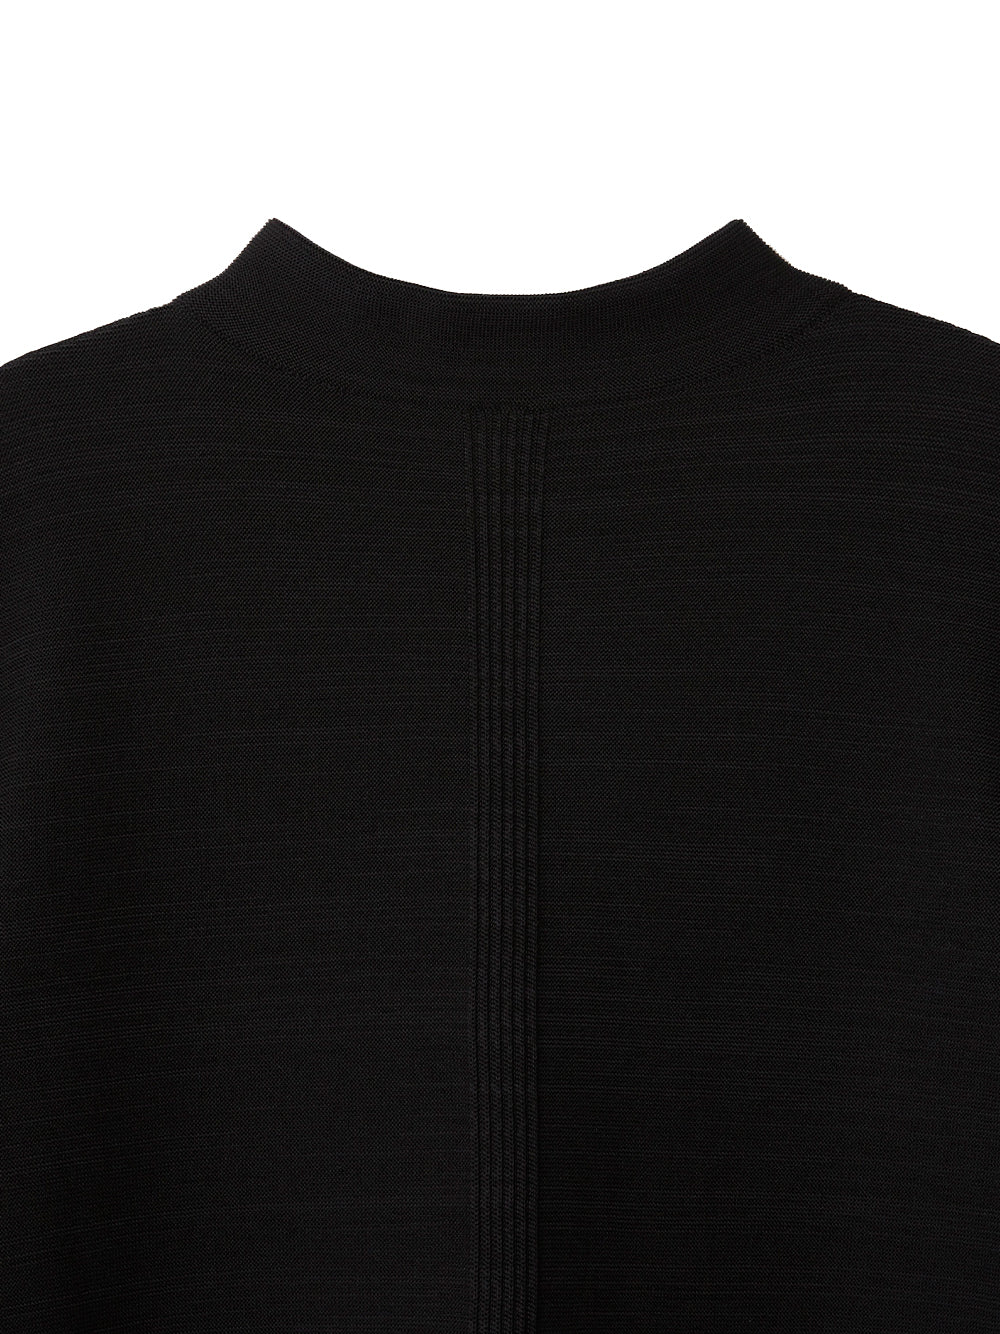 Garter Mockneck Short Sleeve Tee Shirt Black